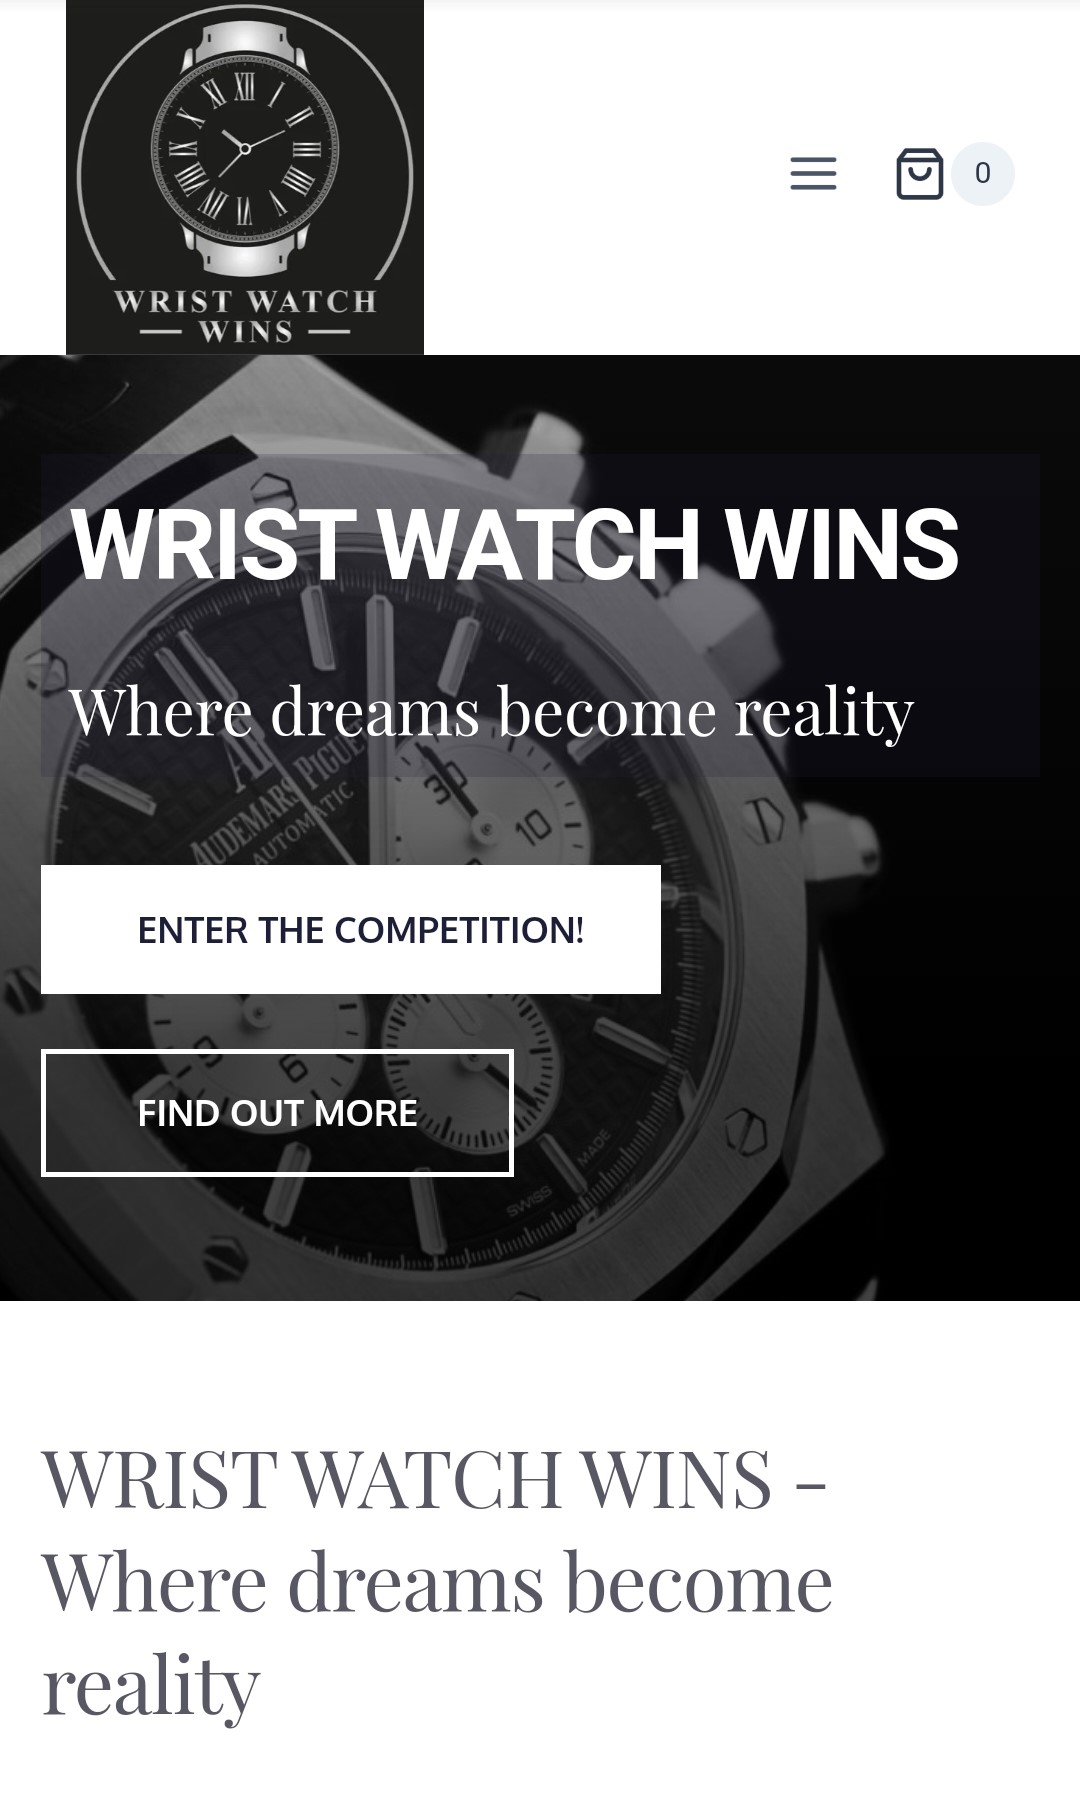 Wrist Watch Wins